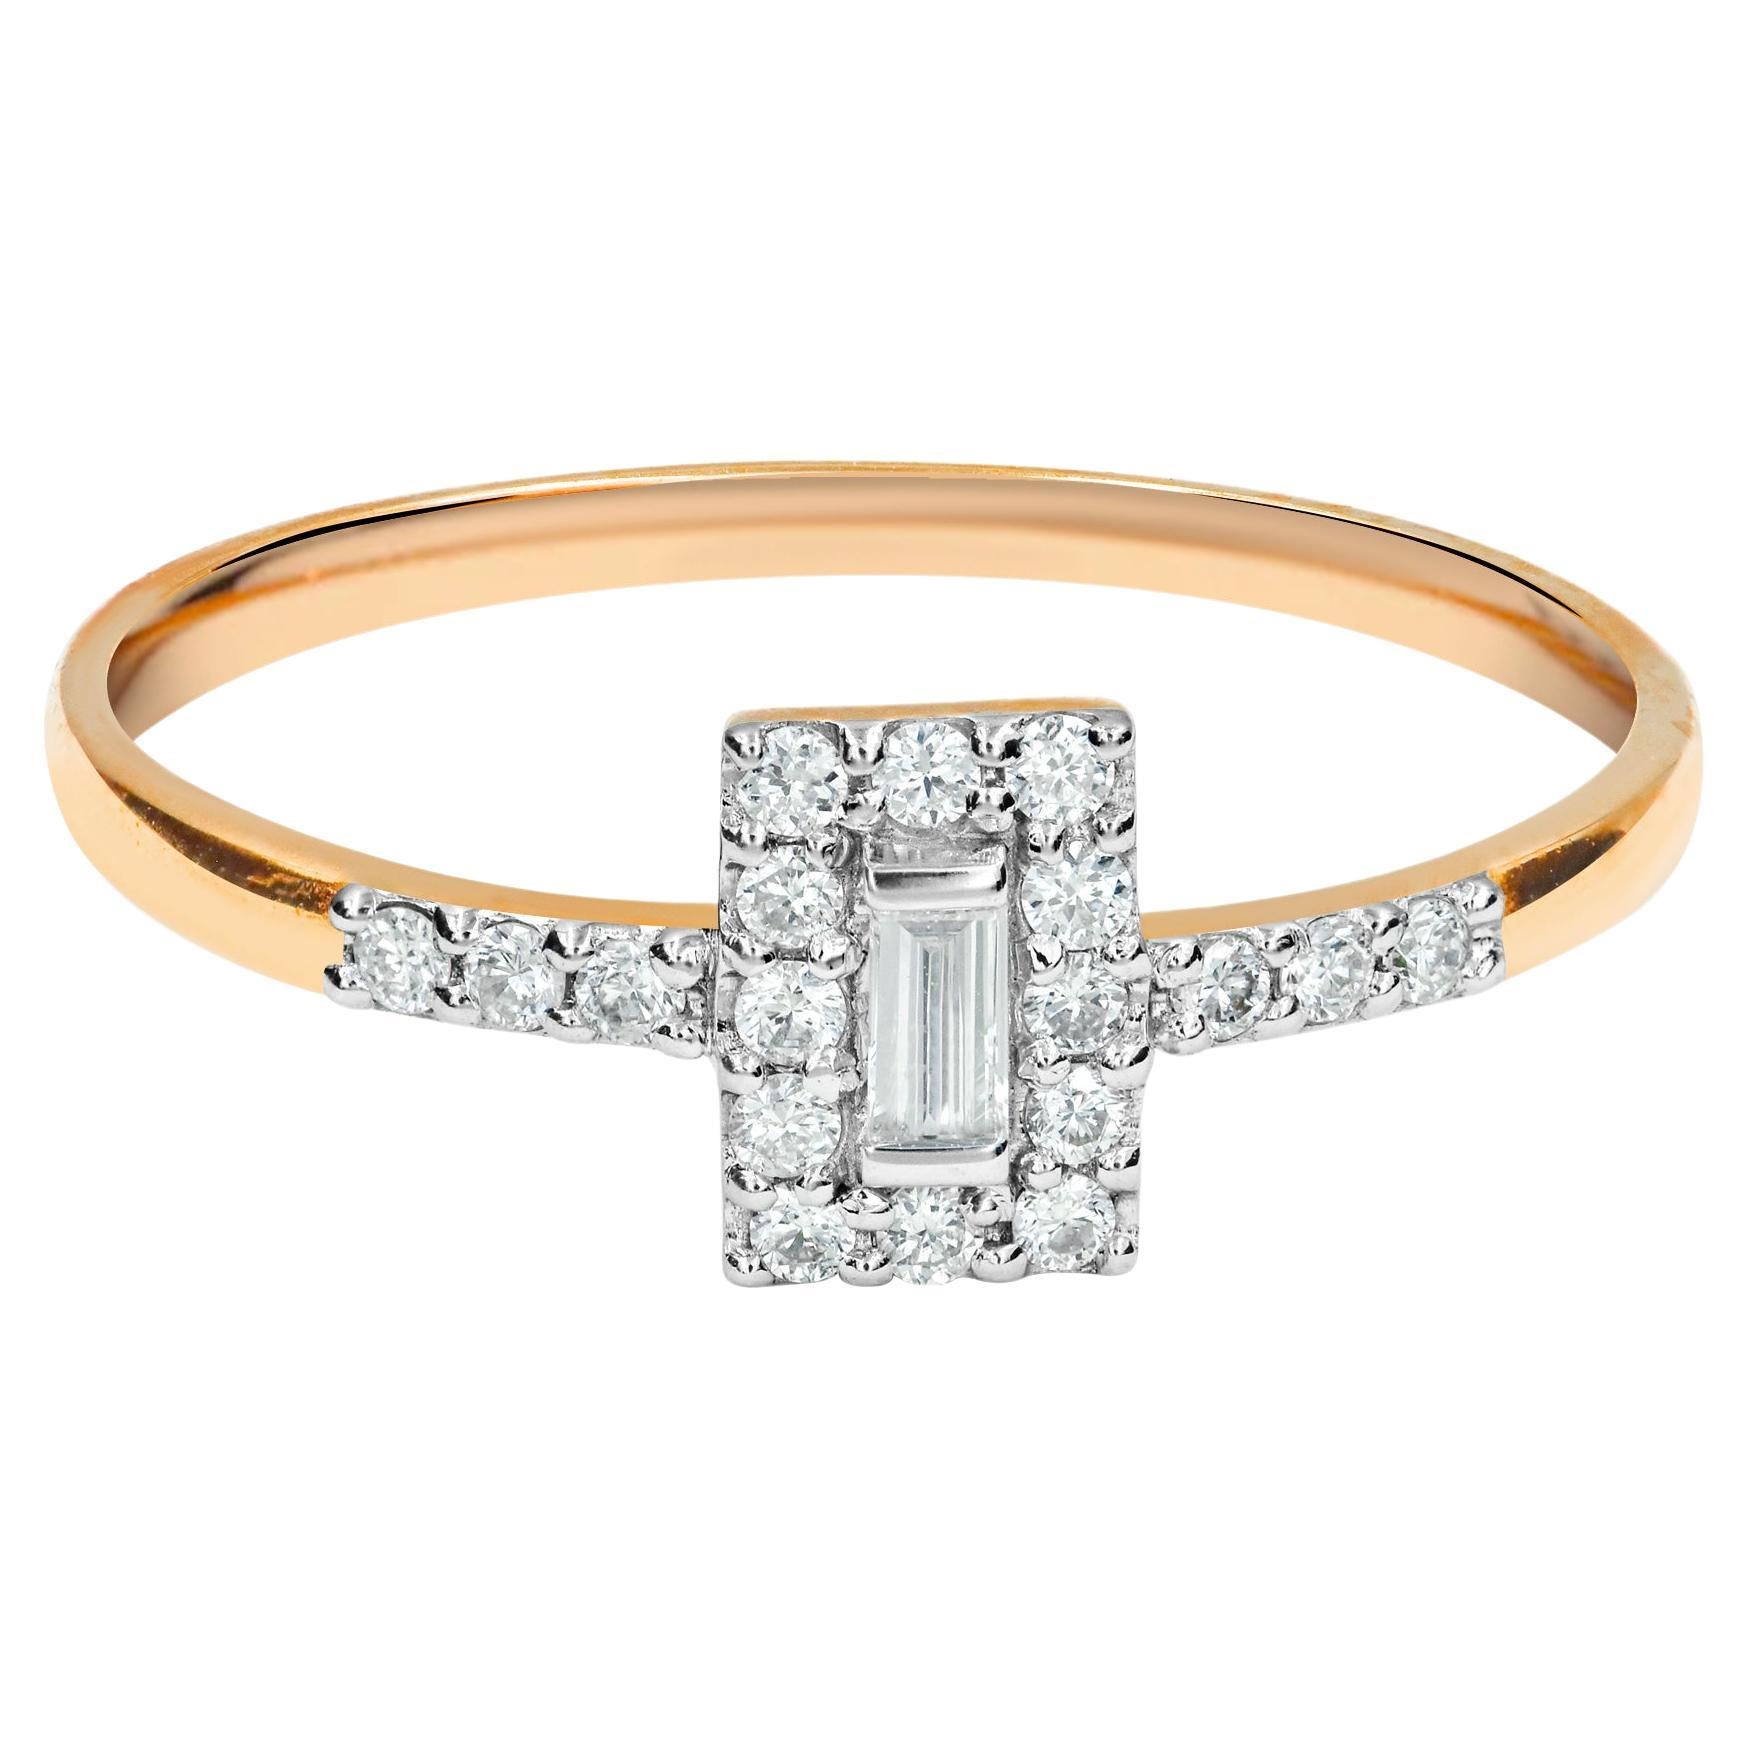 For Sale:  14k Gold Baguette Ring Diamond Baguette Ring Engagement Ring